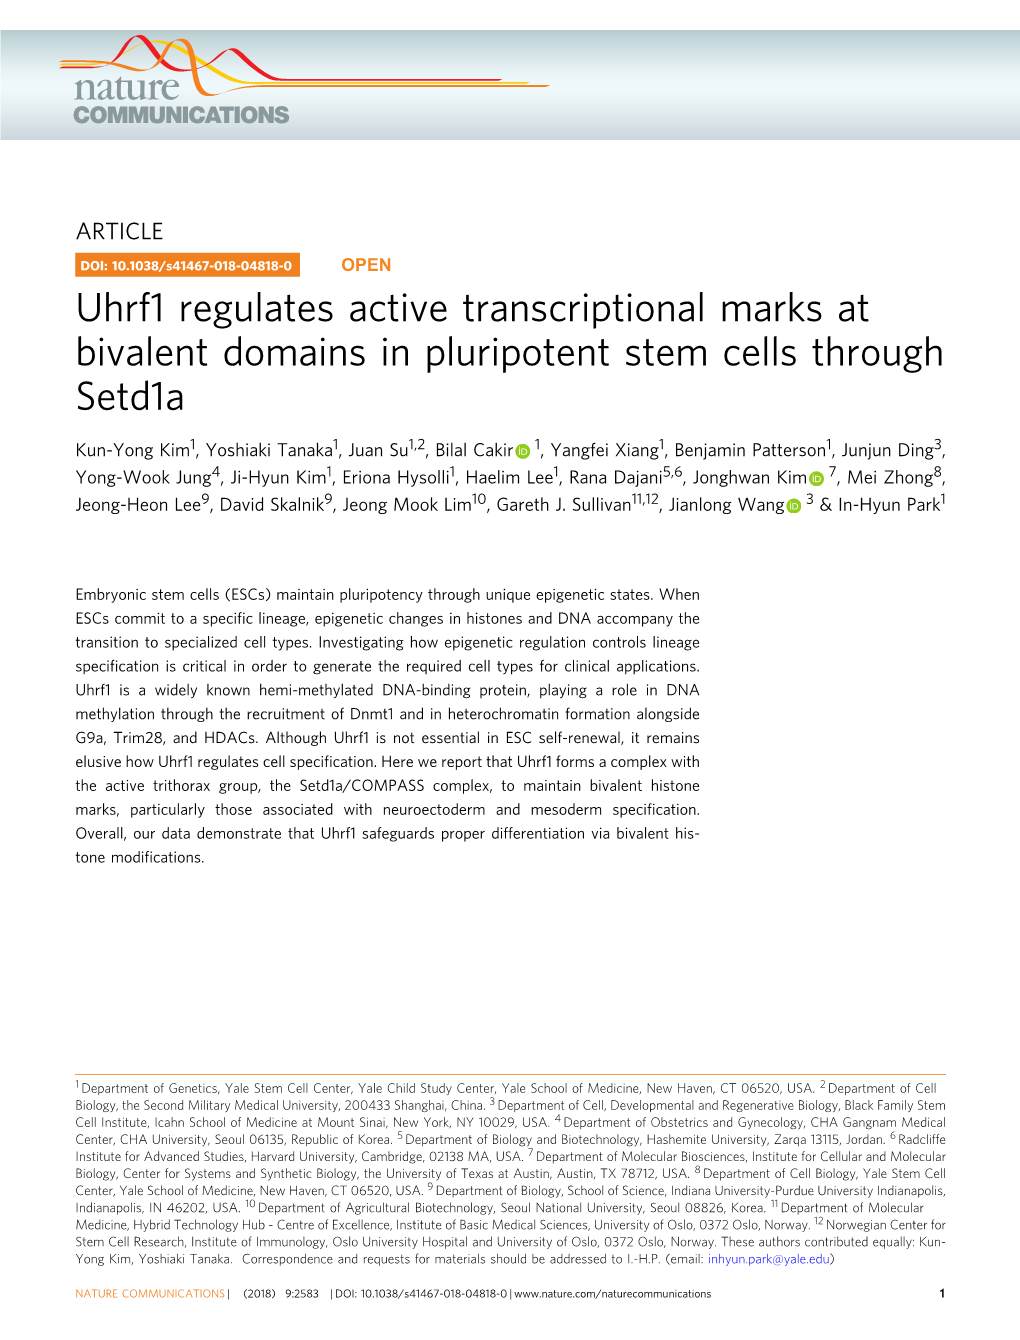 Uhrf1 Regulates Active Transcriptional Marks at Bivalent Domains in Pluripotent Stem Cells Through Setd1a